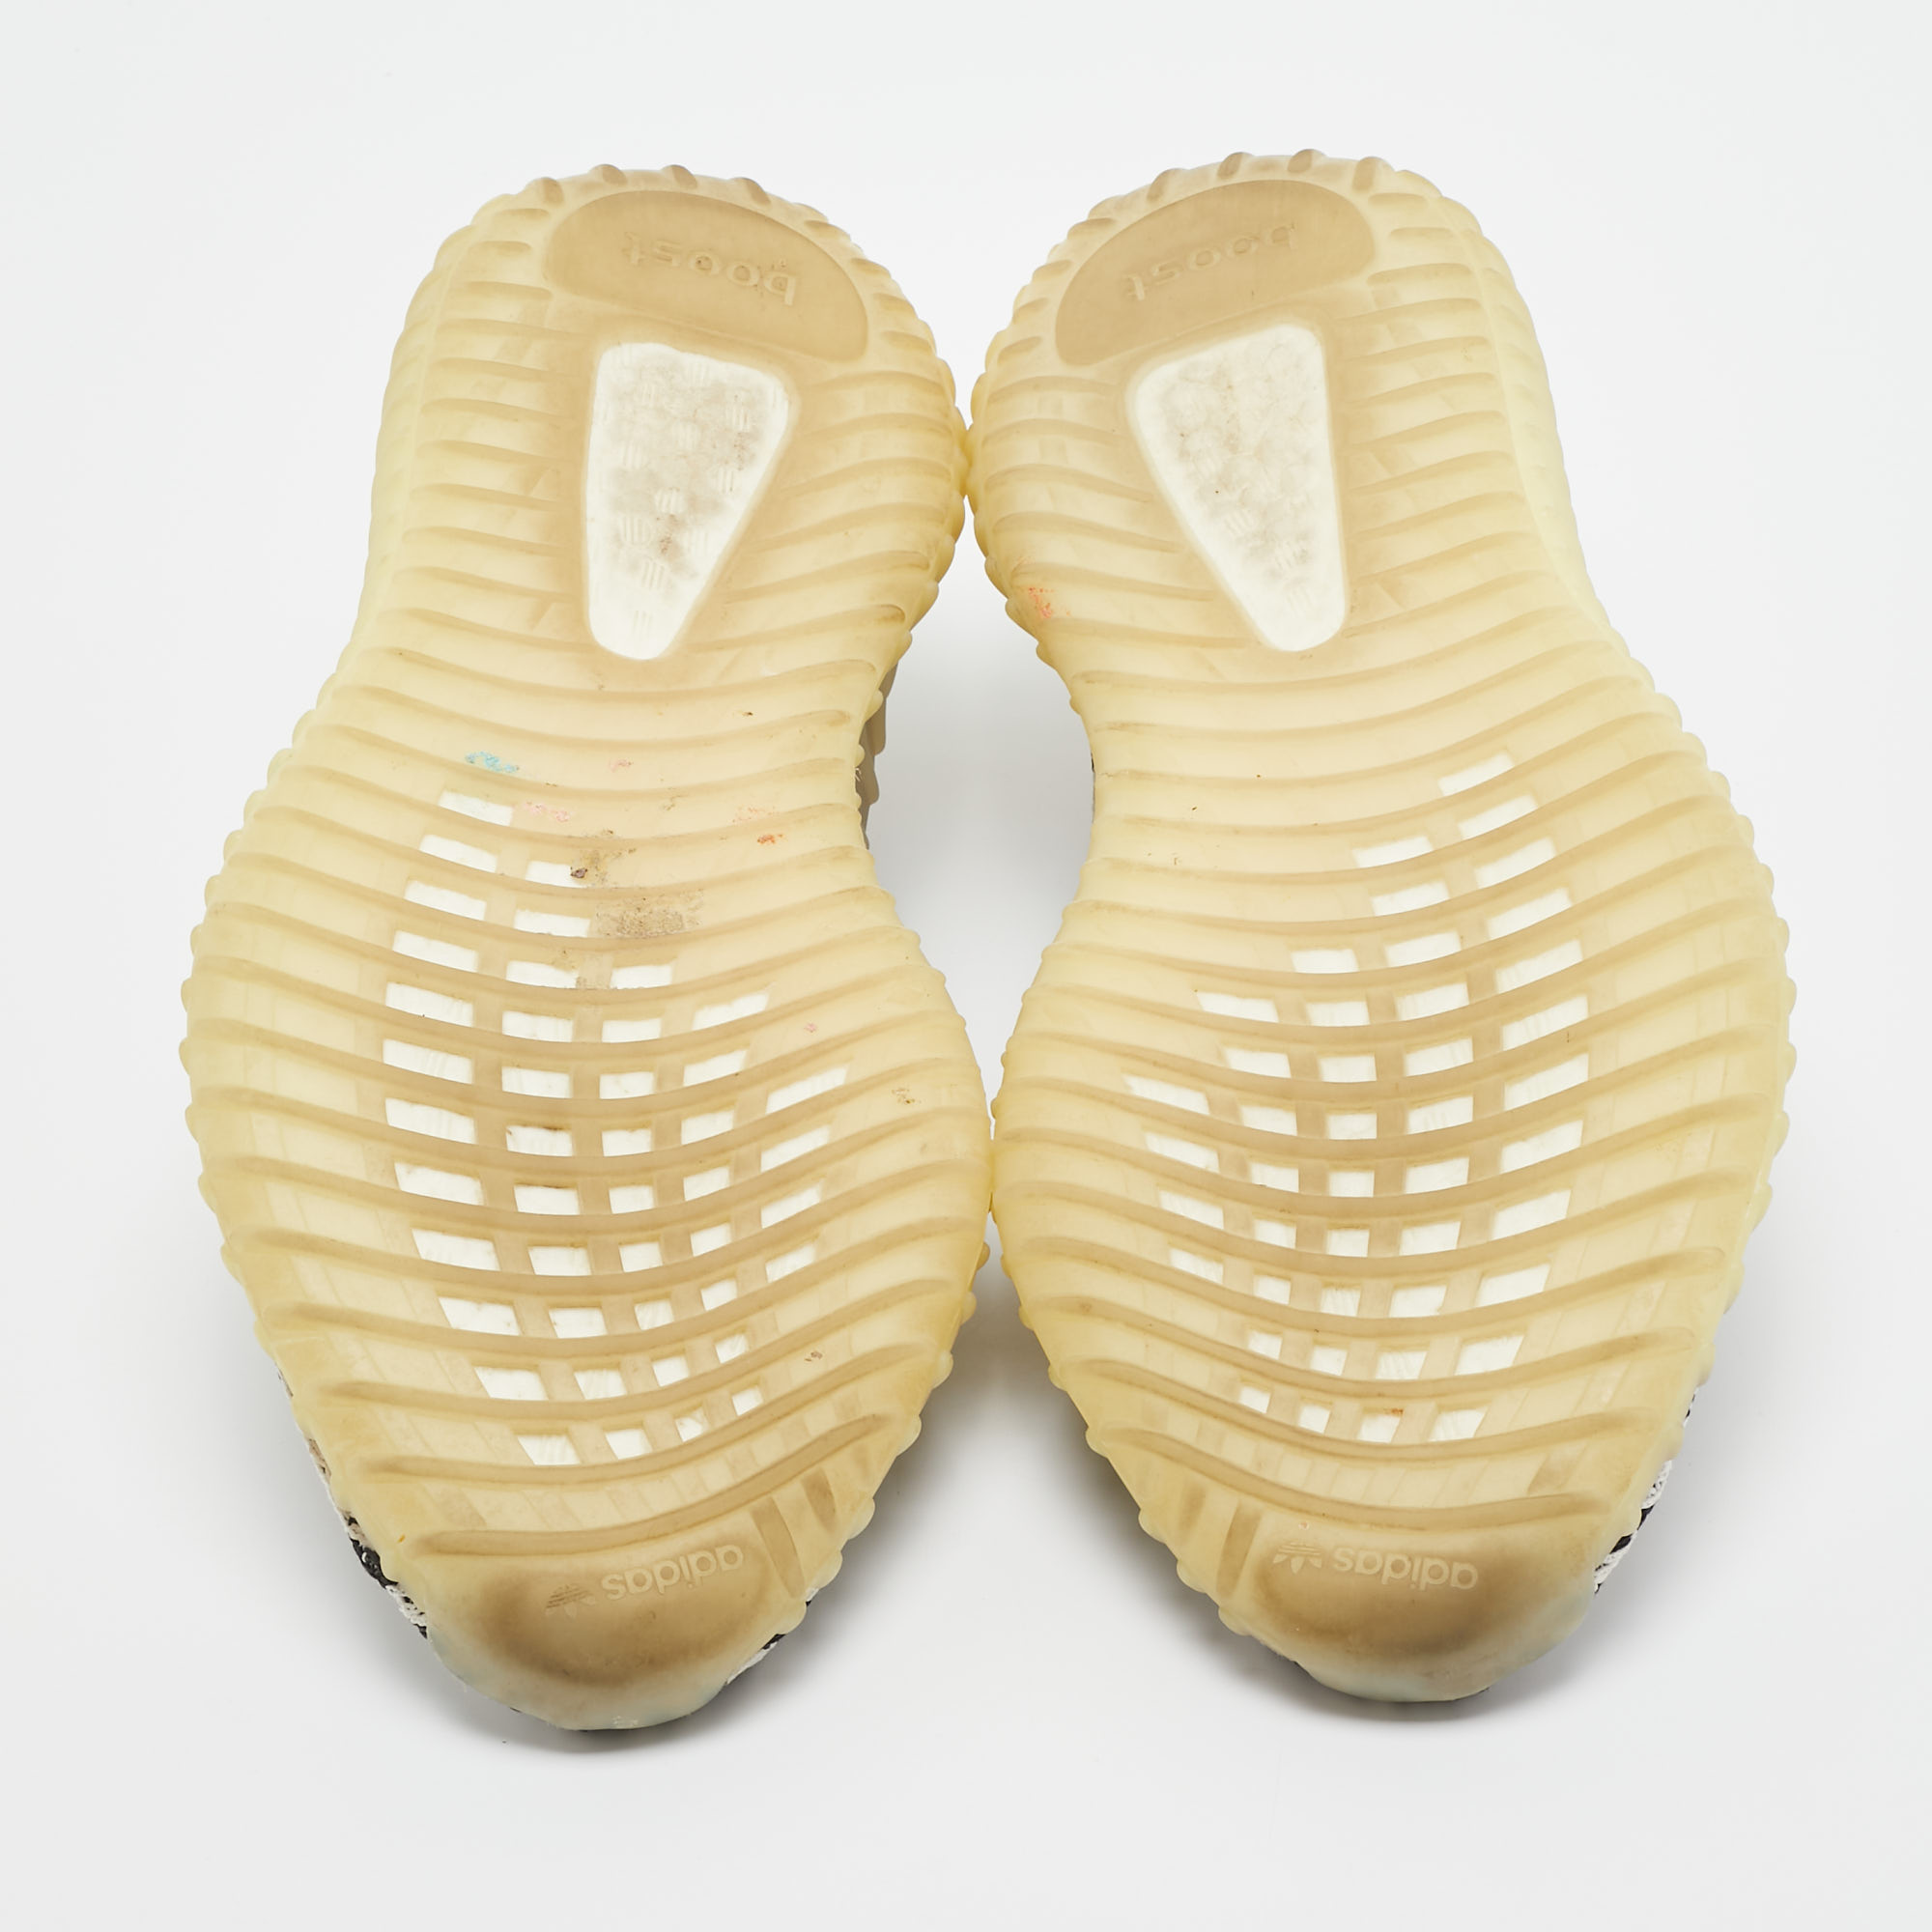 Yeezy X Adidas White/Black Knit Fabric Boost 350 V2 Zebra Sneakers Size 41 1/3